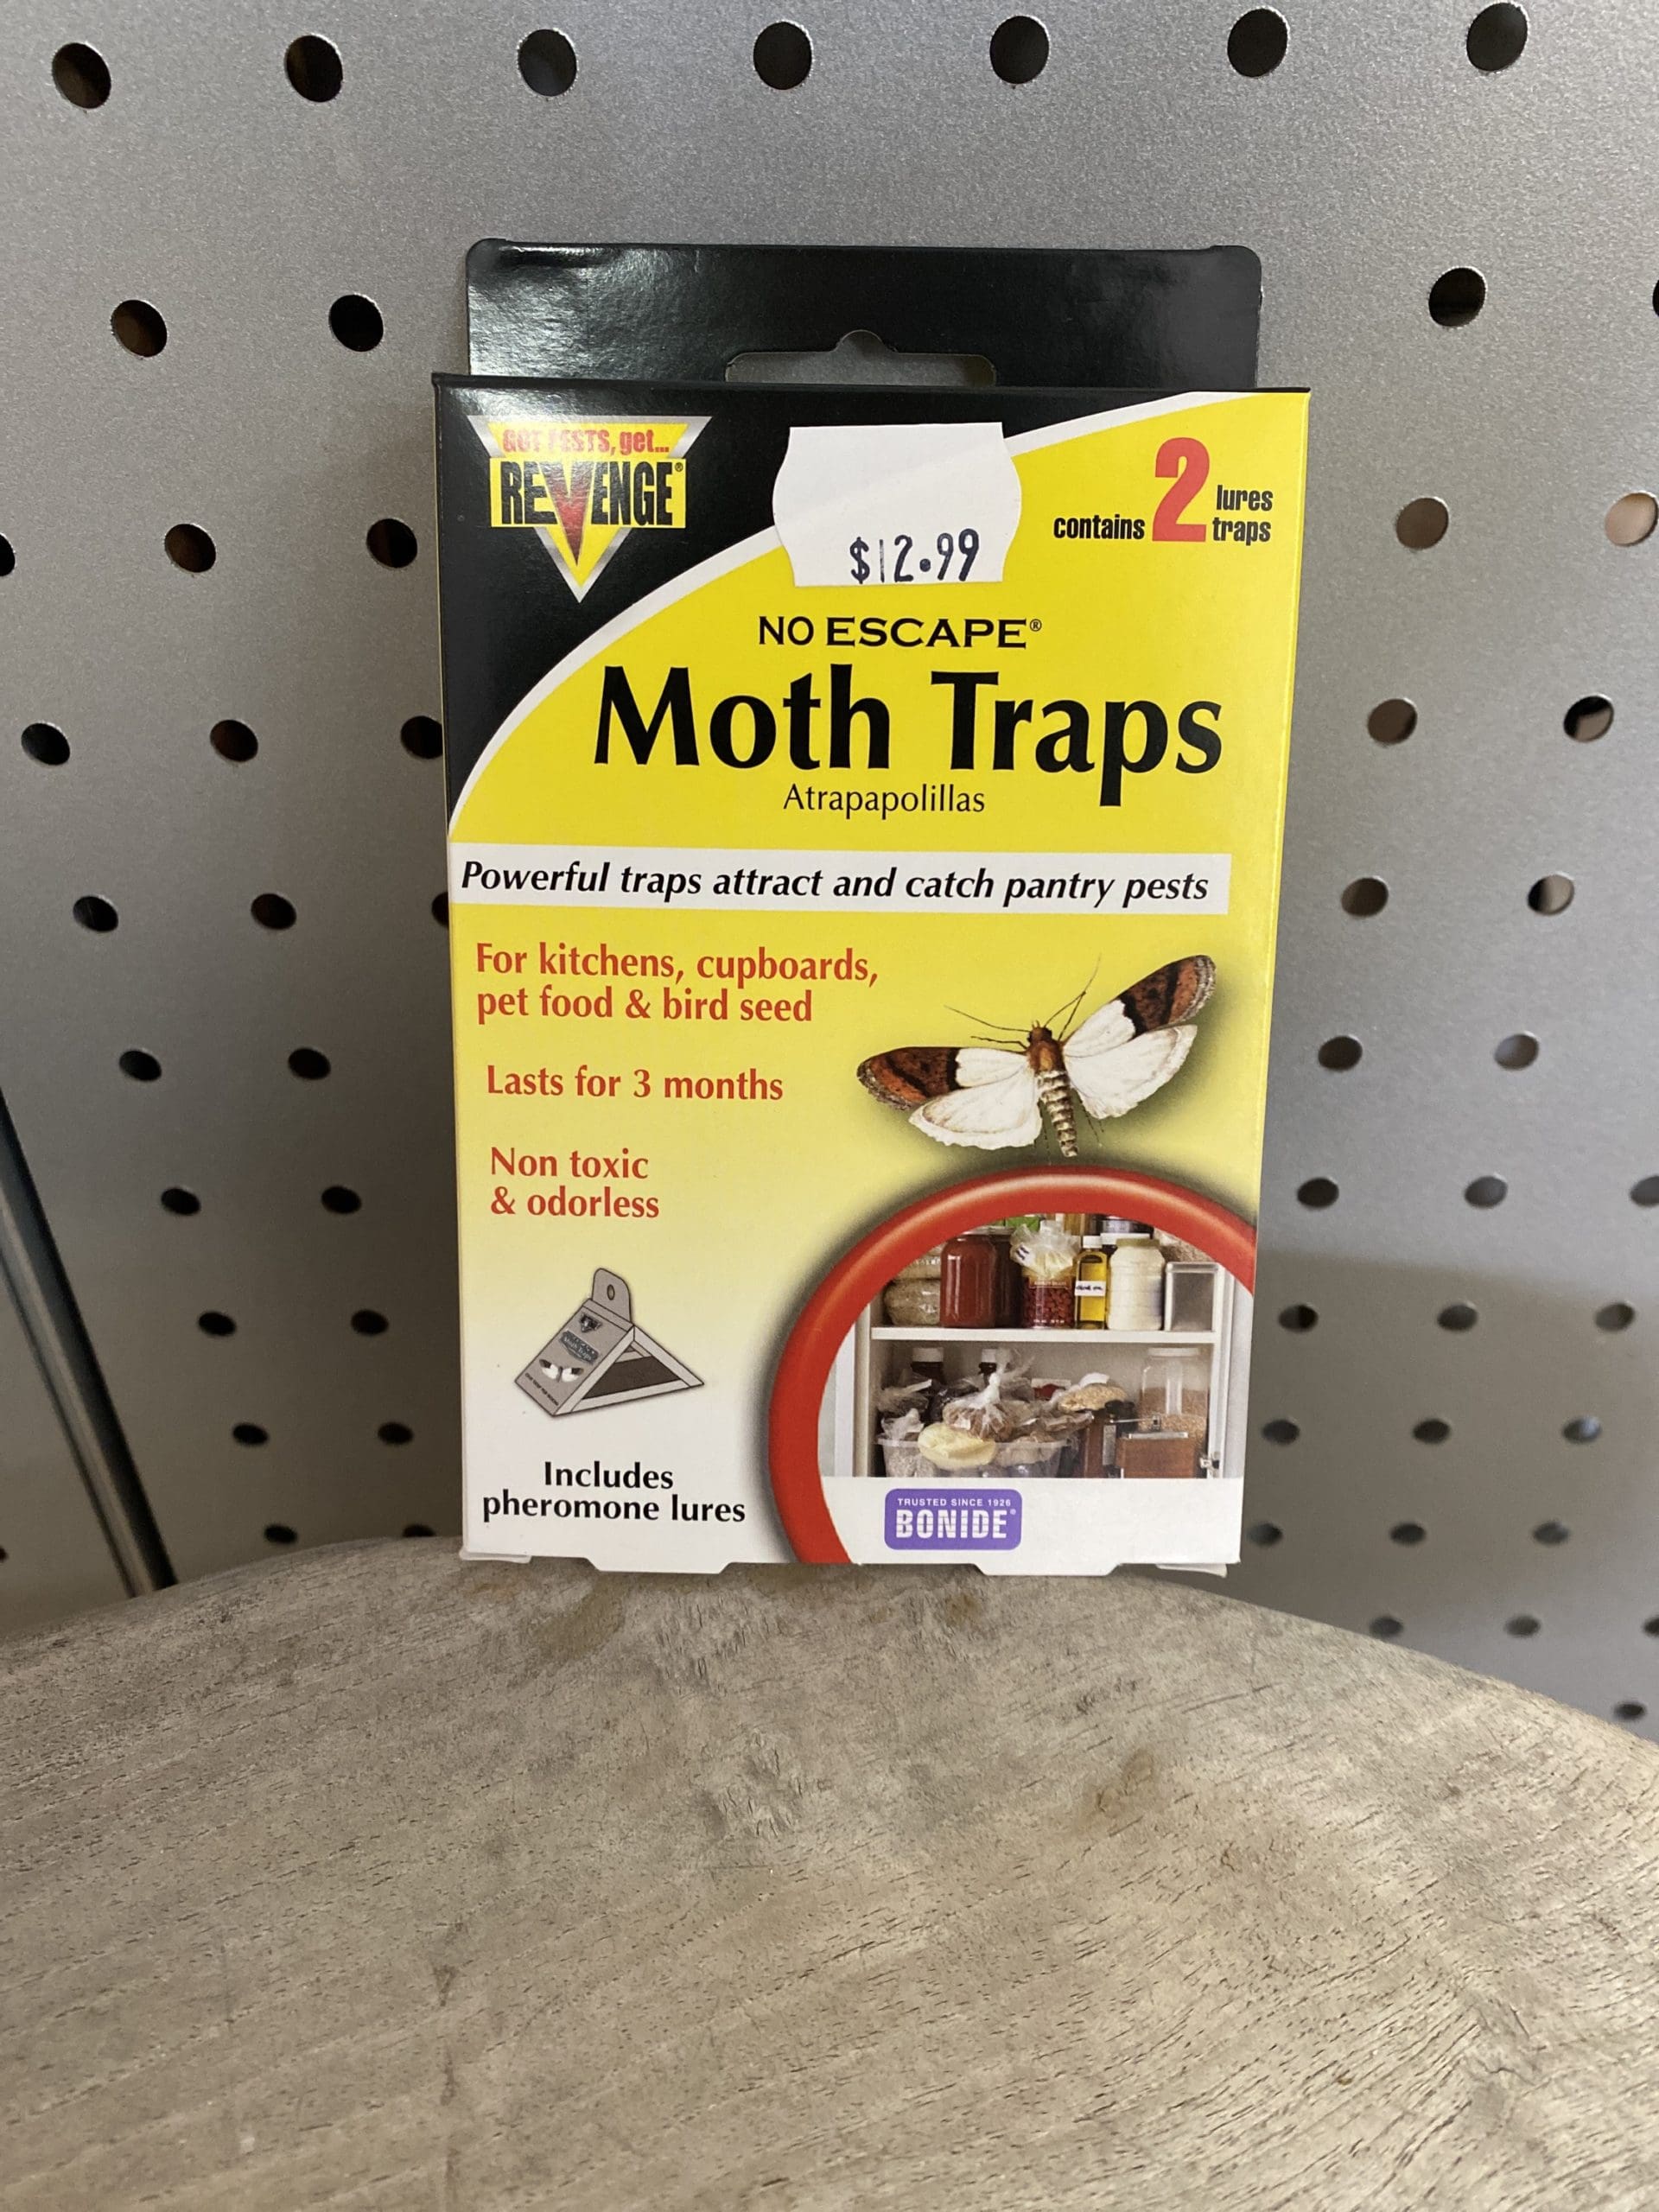 Revenge No Escape Moth Traps - Where to buy Revenge Pantry Moth